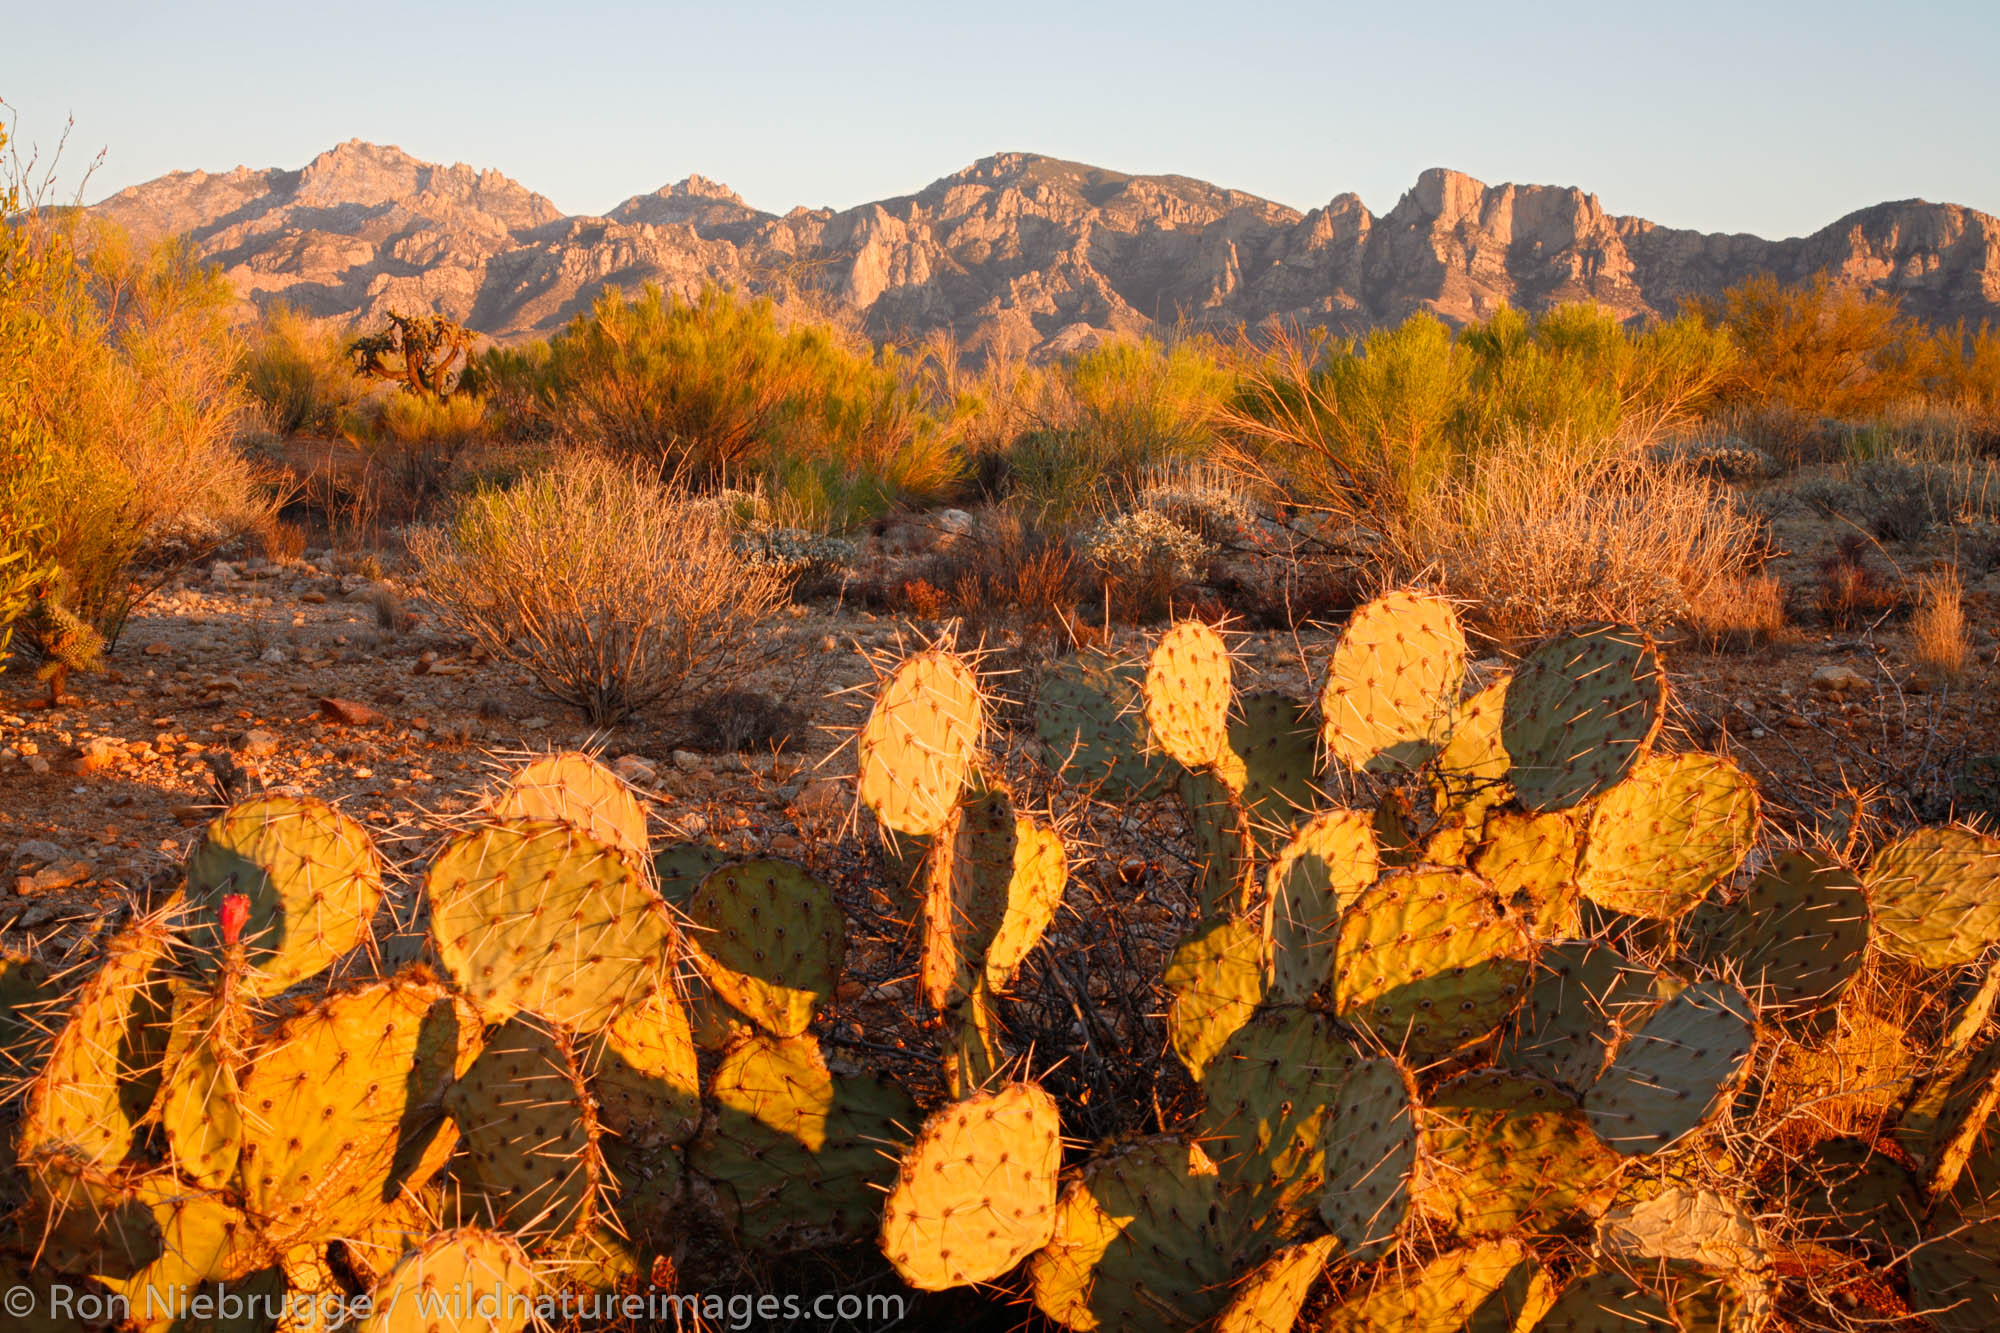 Looking towards the Santa Catalina Mountains of the Coronado National Forest, Oro Valley, Tucson, Arizona.